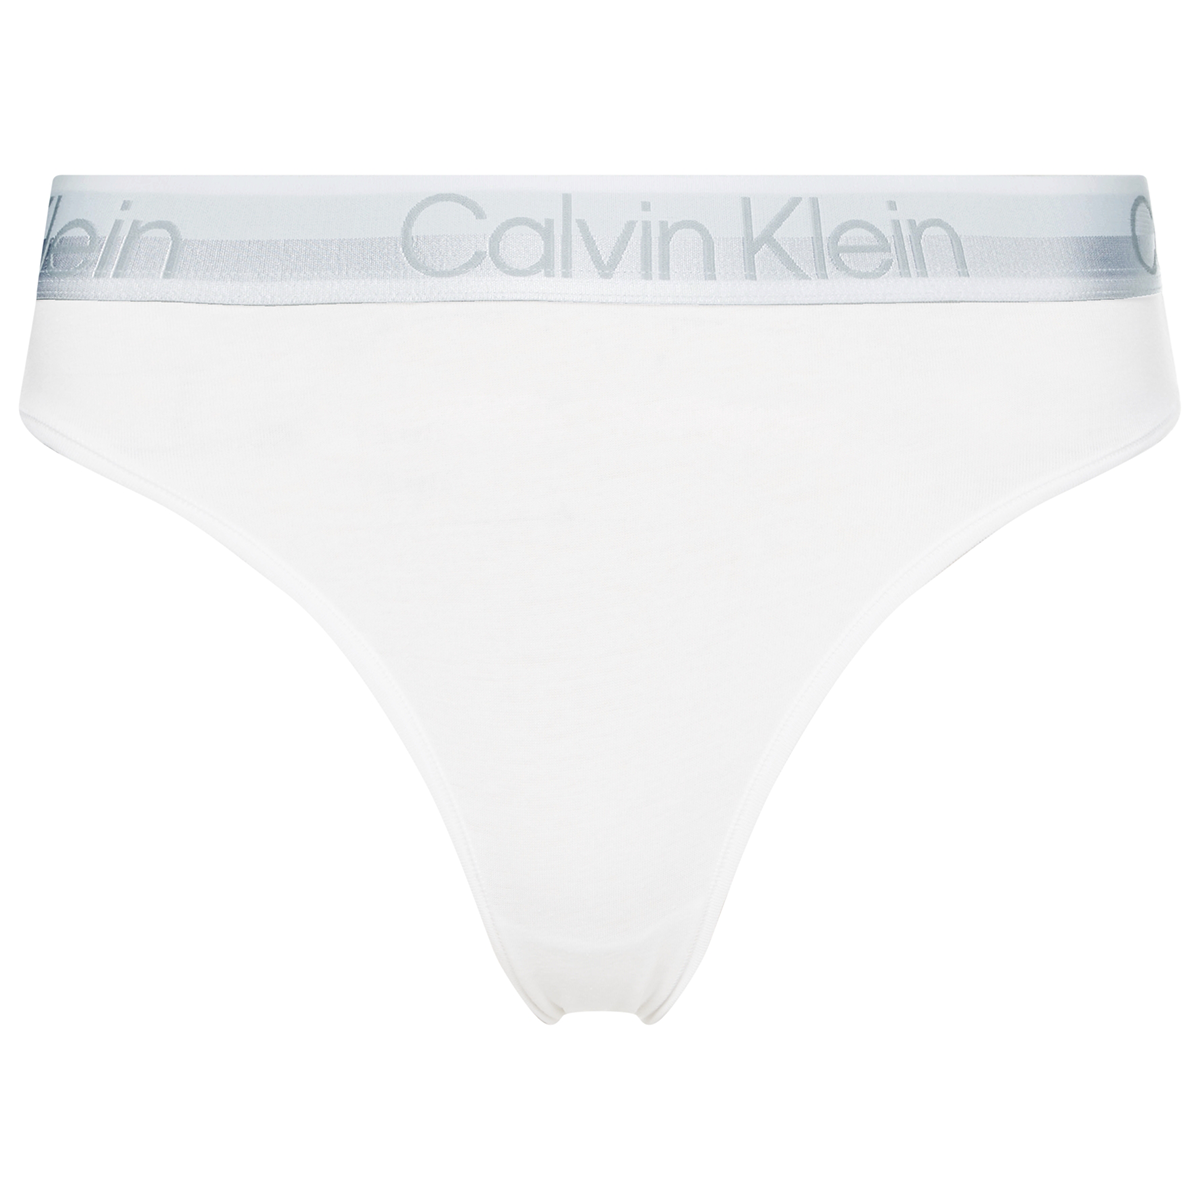 Calvin Klein Cheeky Bikini Tai trusse, Farve: Hvid, Størrelse: XS, Dame